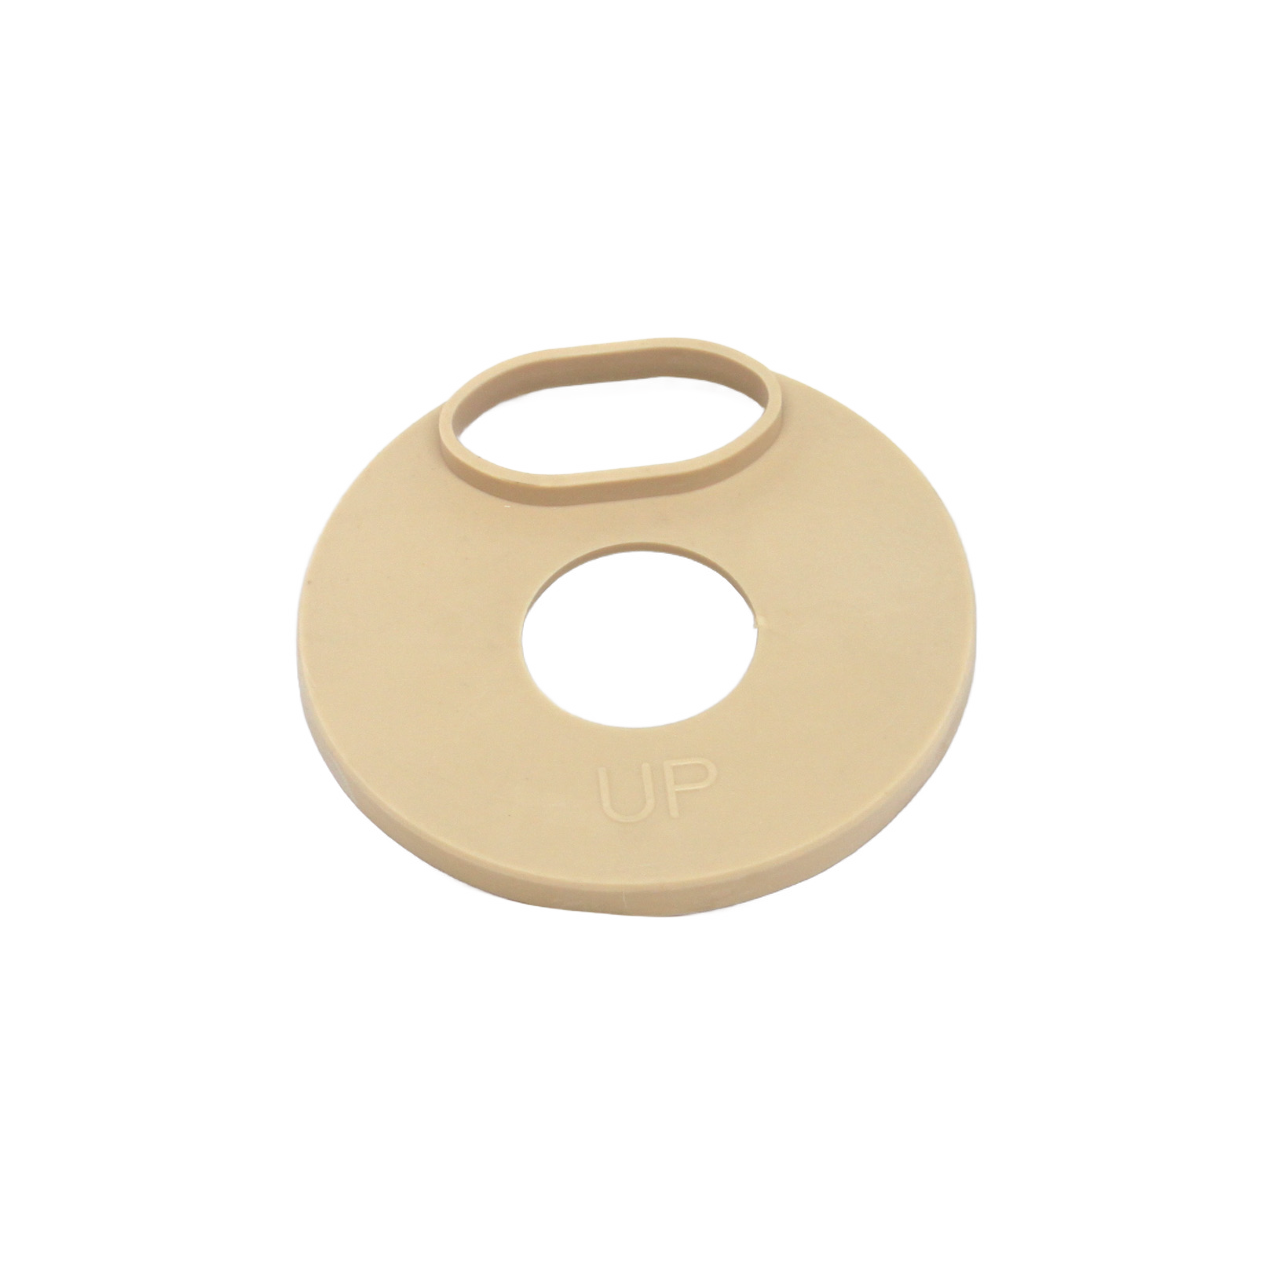 P2875 - Vapor Cap Gasket for Intersan Washfountains